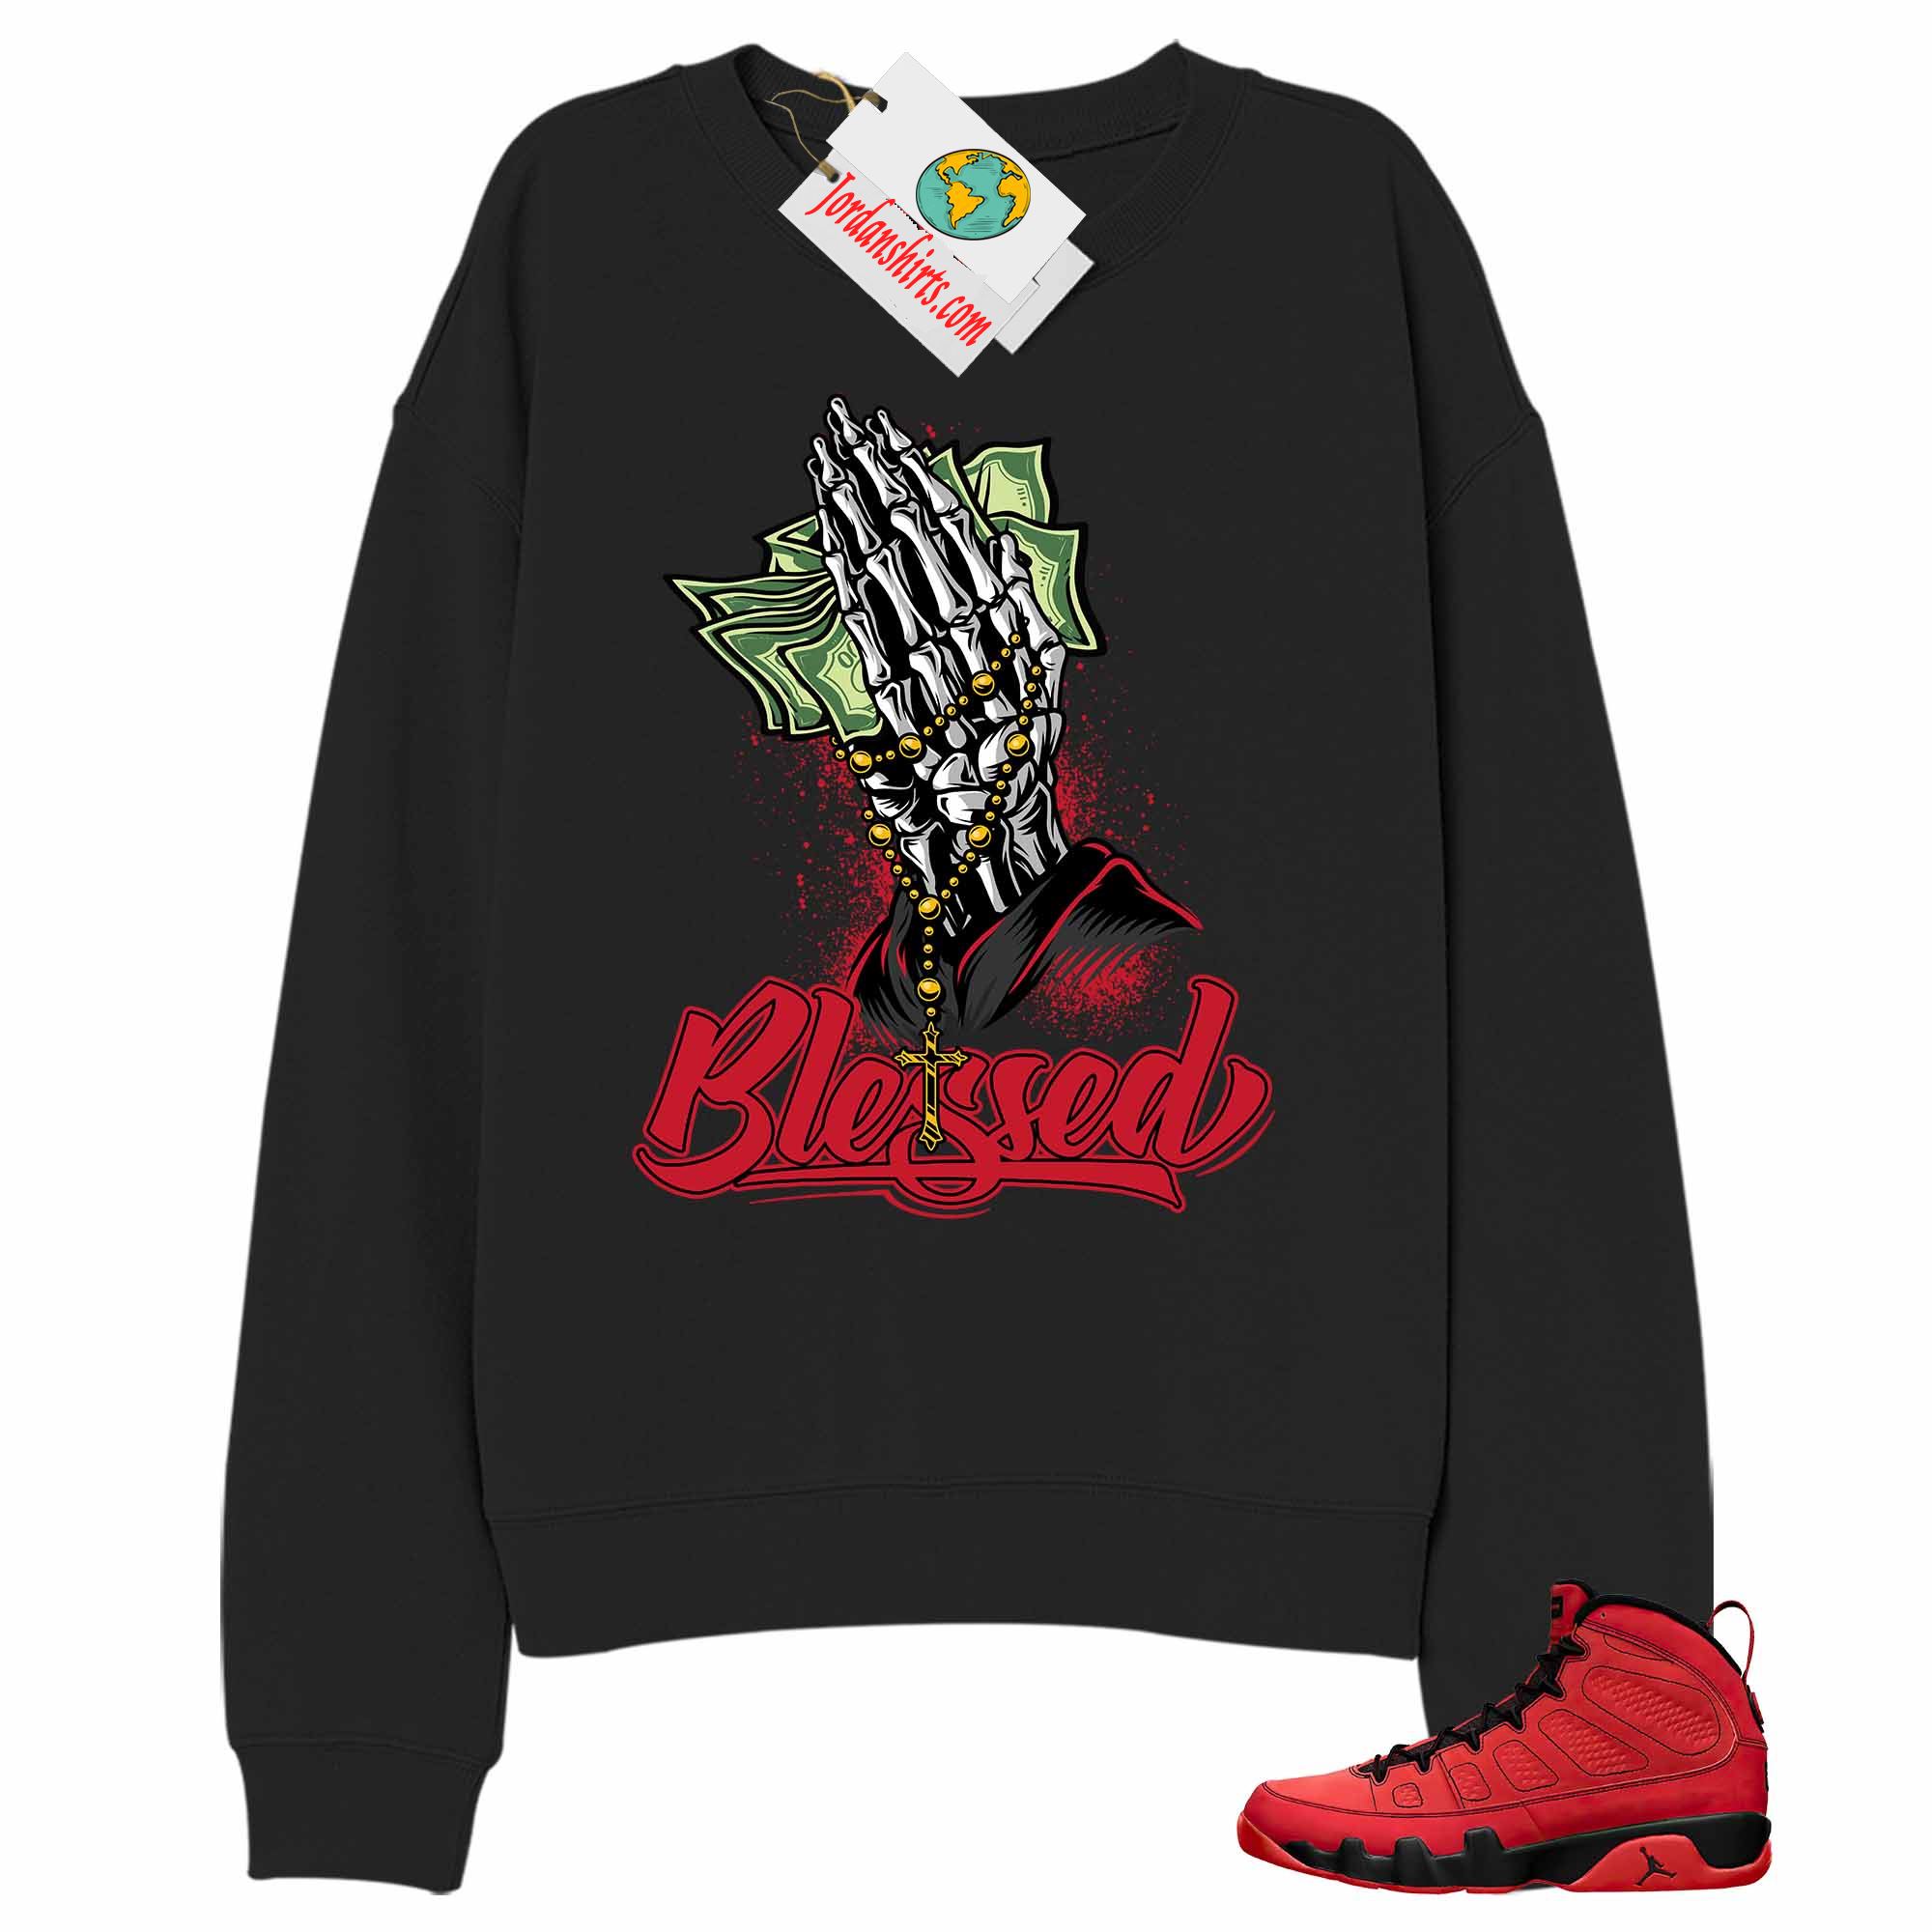 Jordan 9 Sweatshirt, Blessed Pray Hand Money Black Sweatshirt Air Jordan 9 Chile Red 9s Full Size Up To 5xl